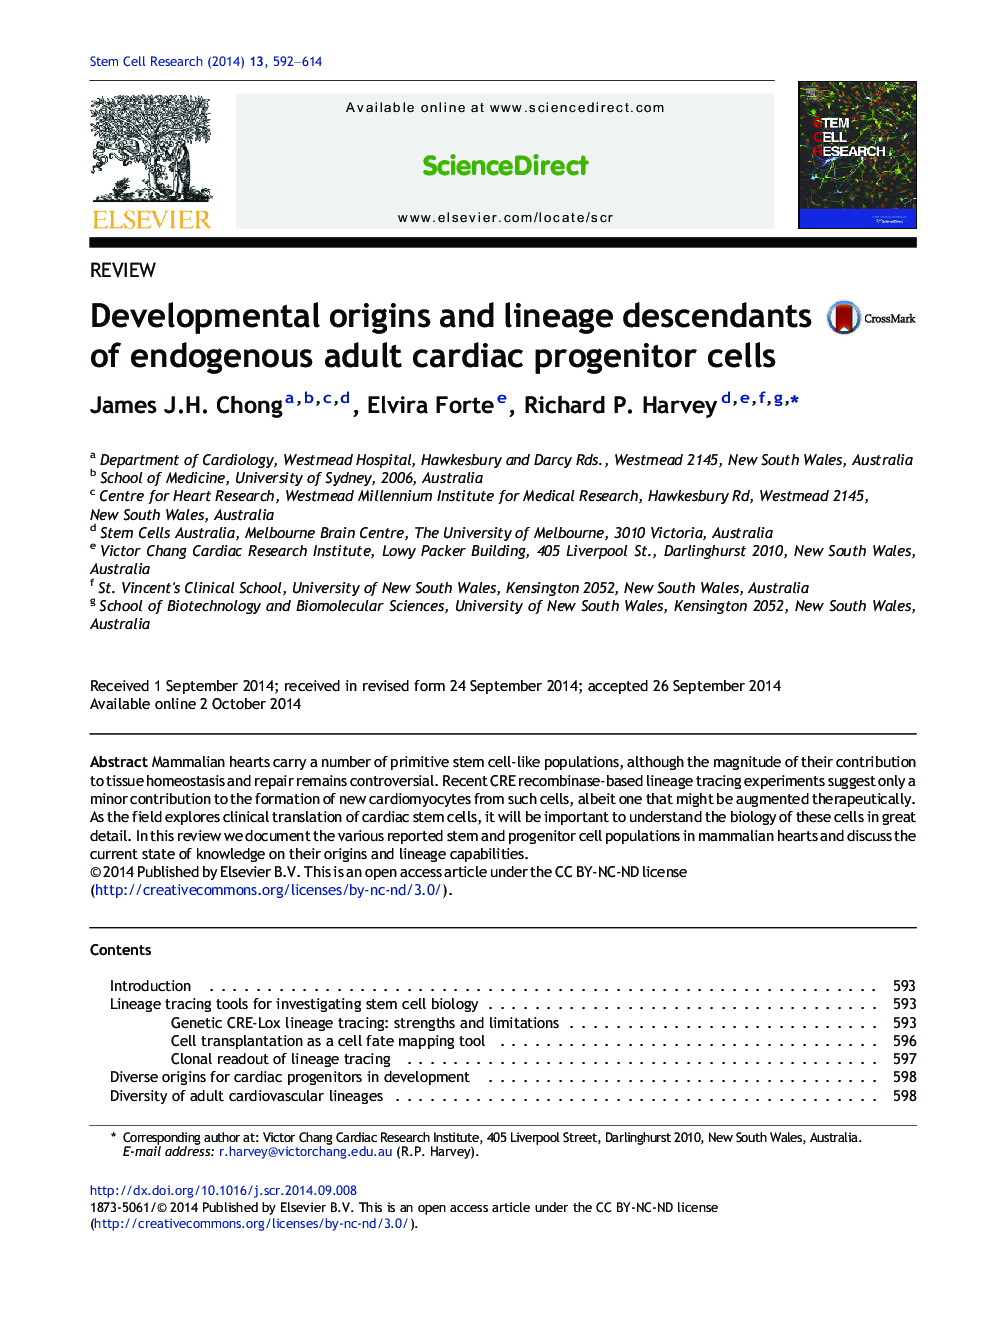 Developmental origins and lineage descendants of endogenous adult cardiac progenitor cells